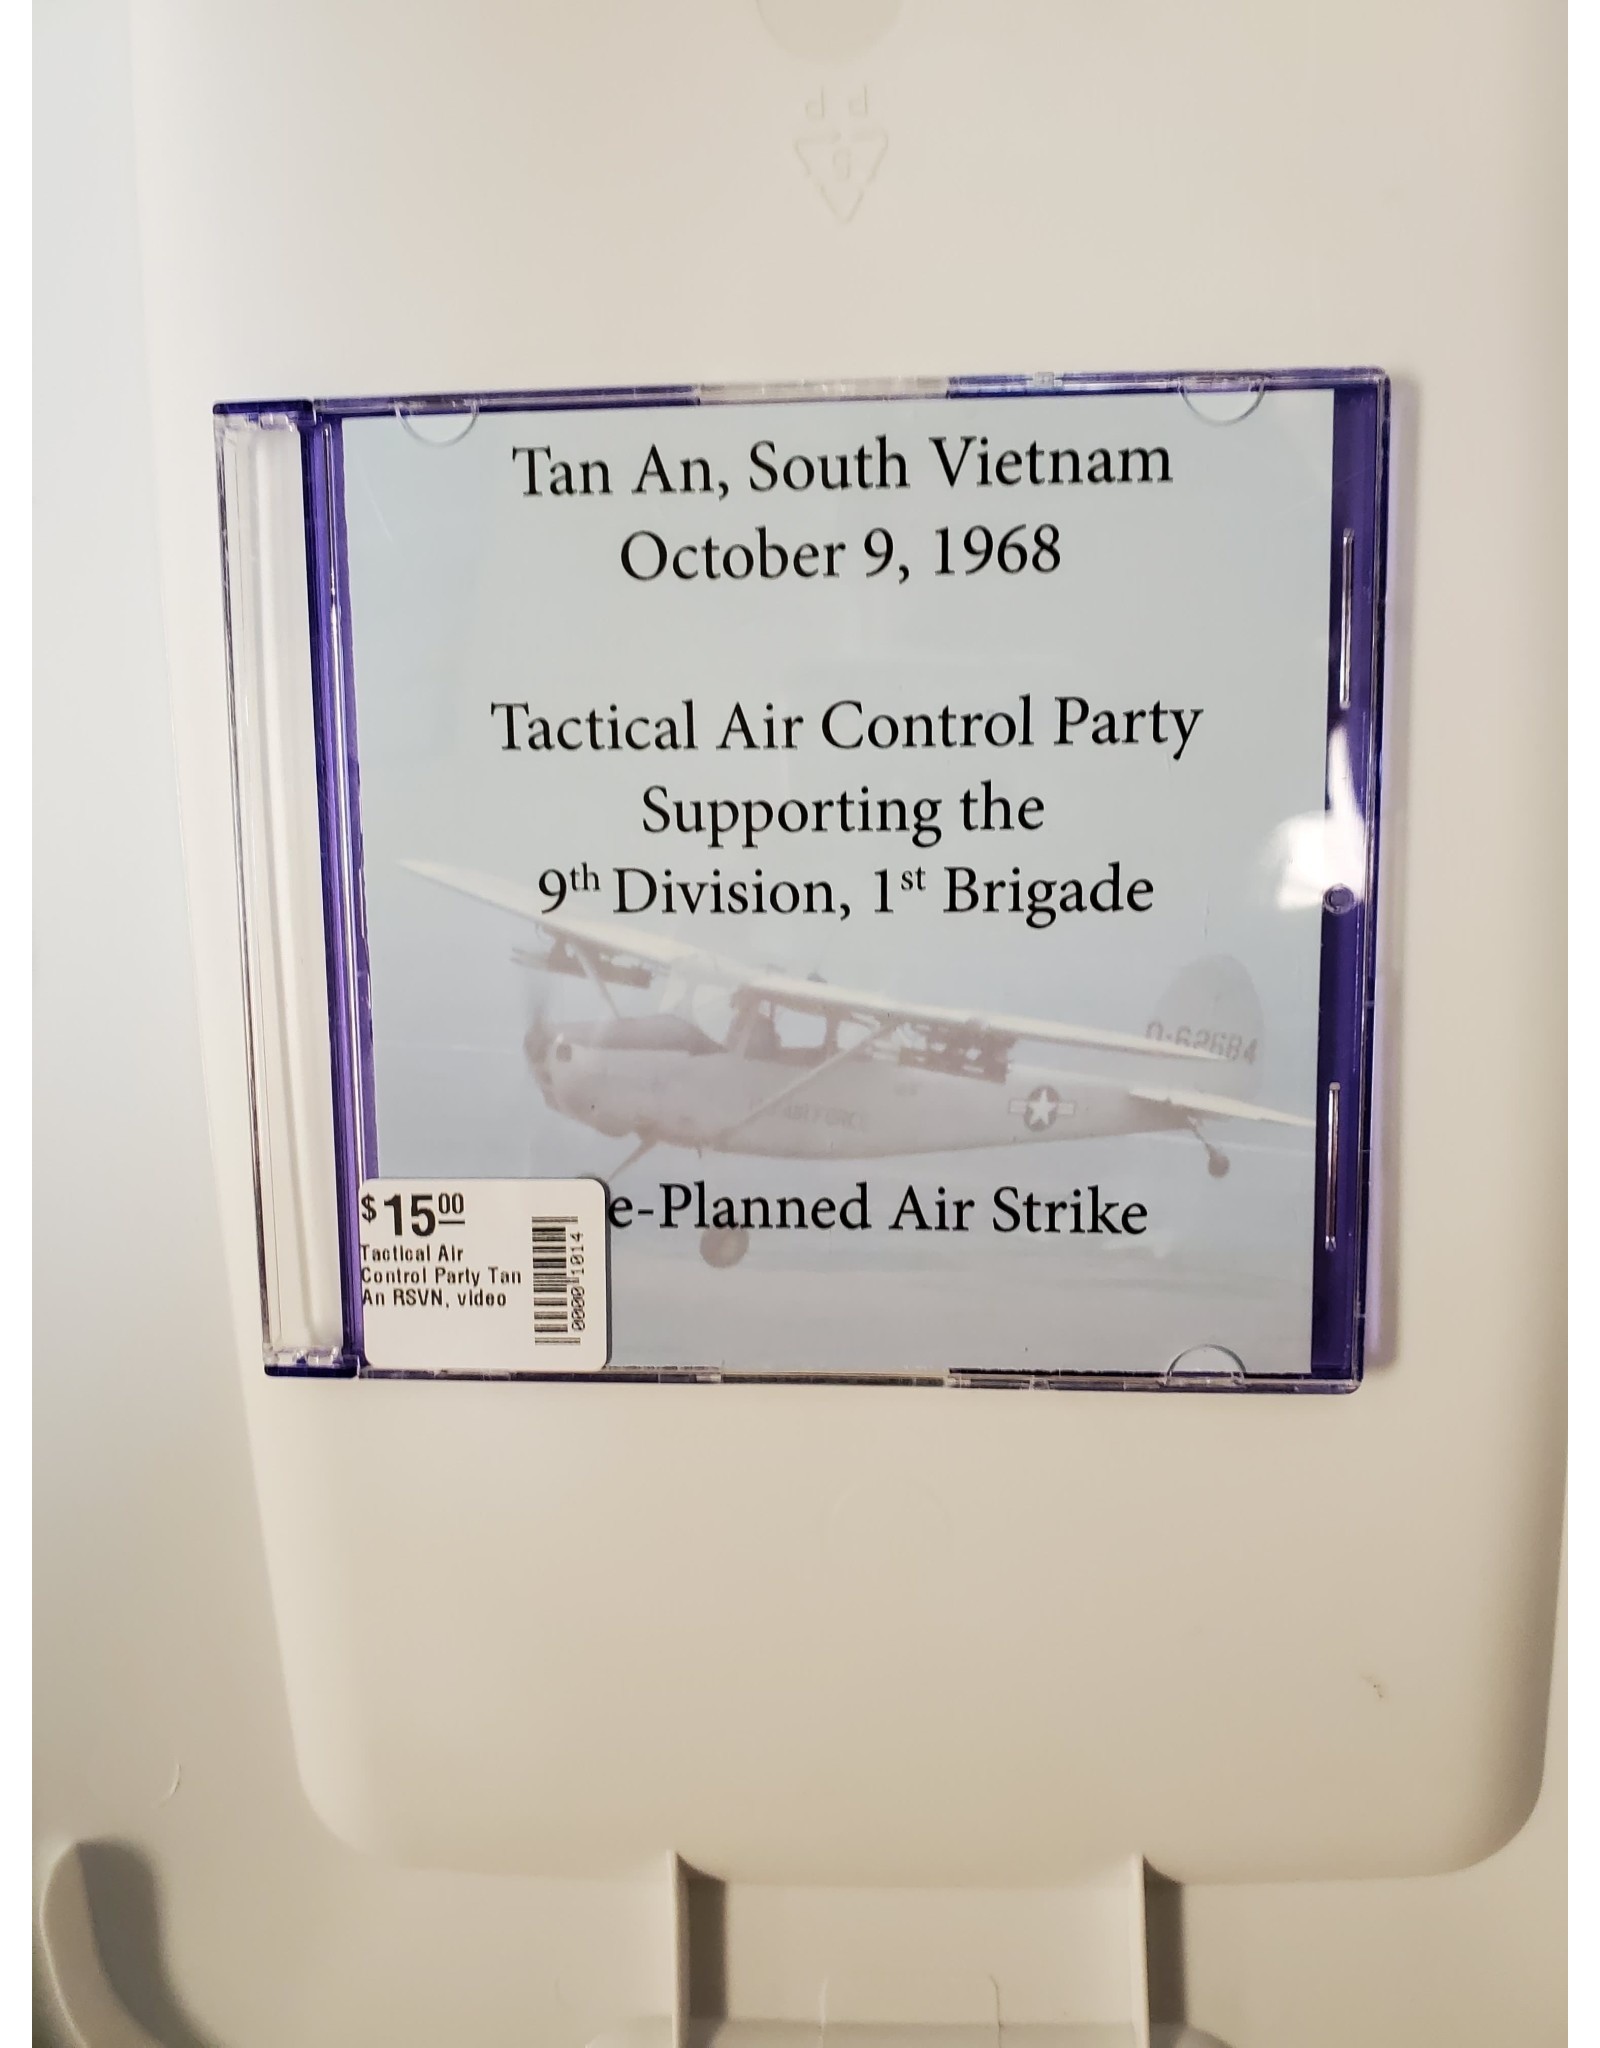 FAC Assoc Tactical Air Control Party Tan An RSVN, video